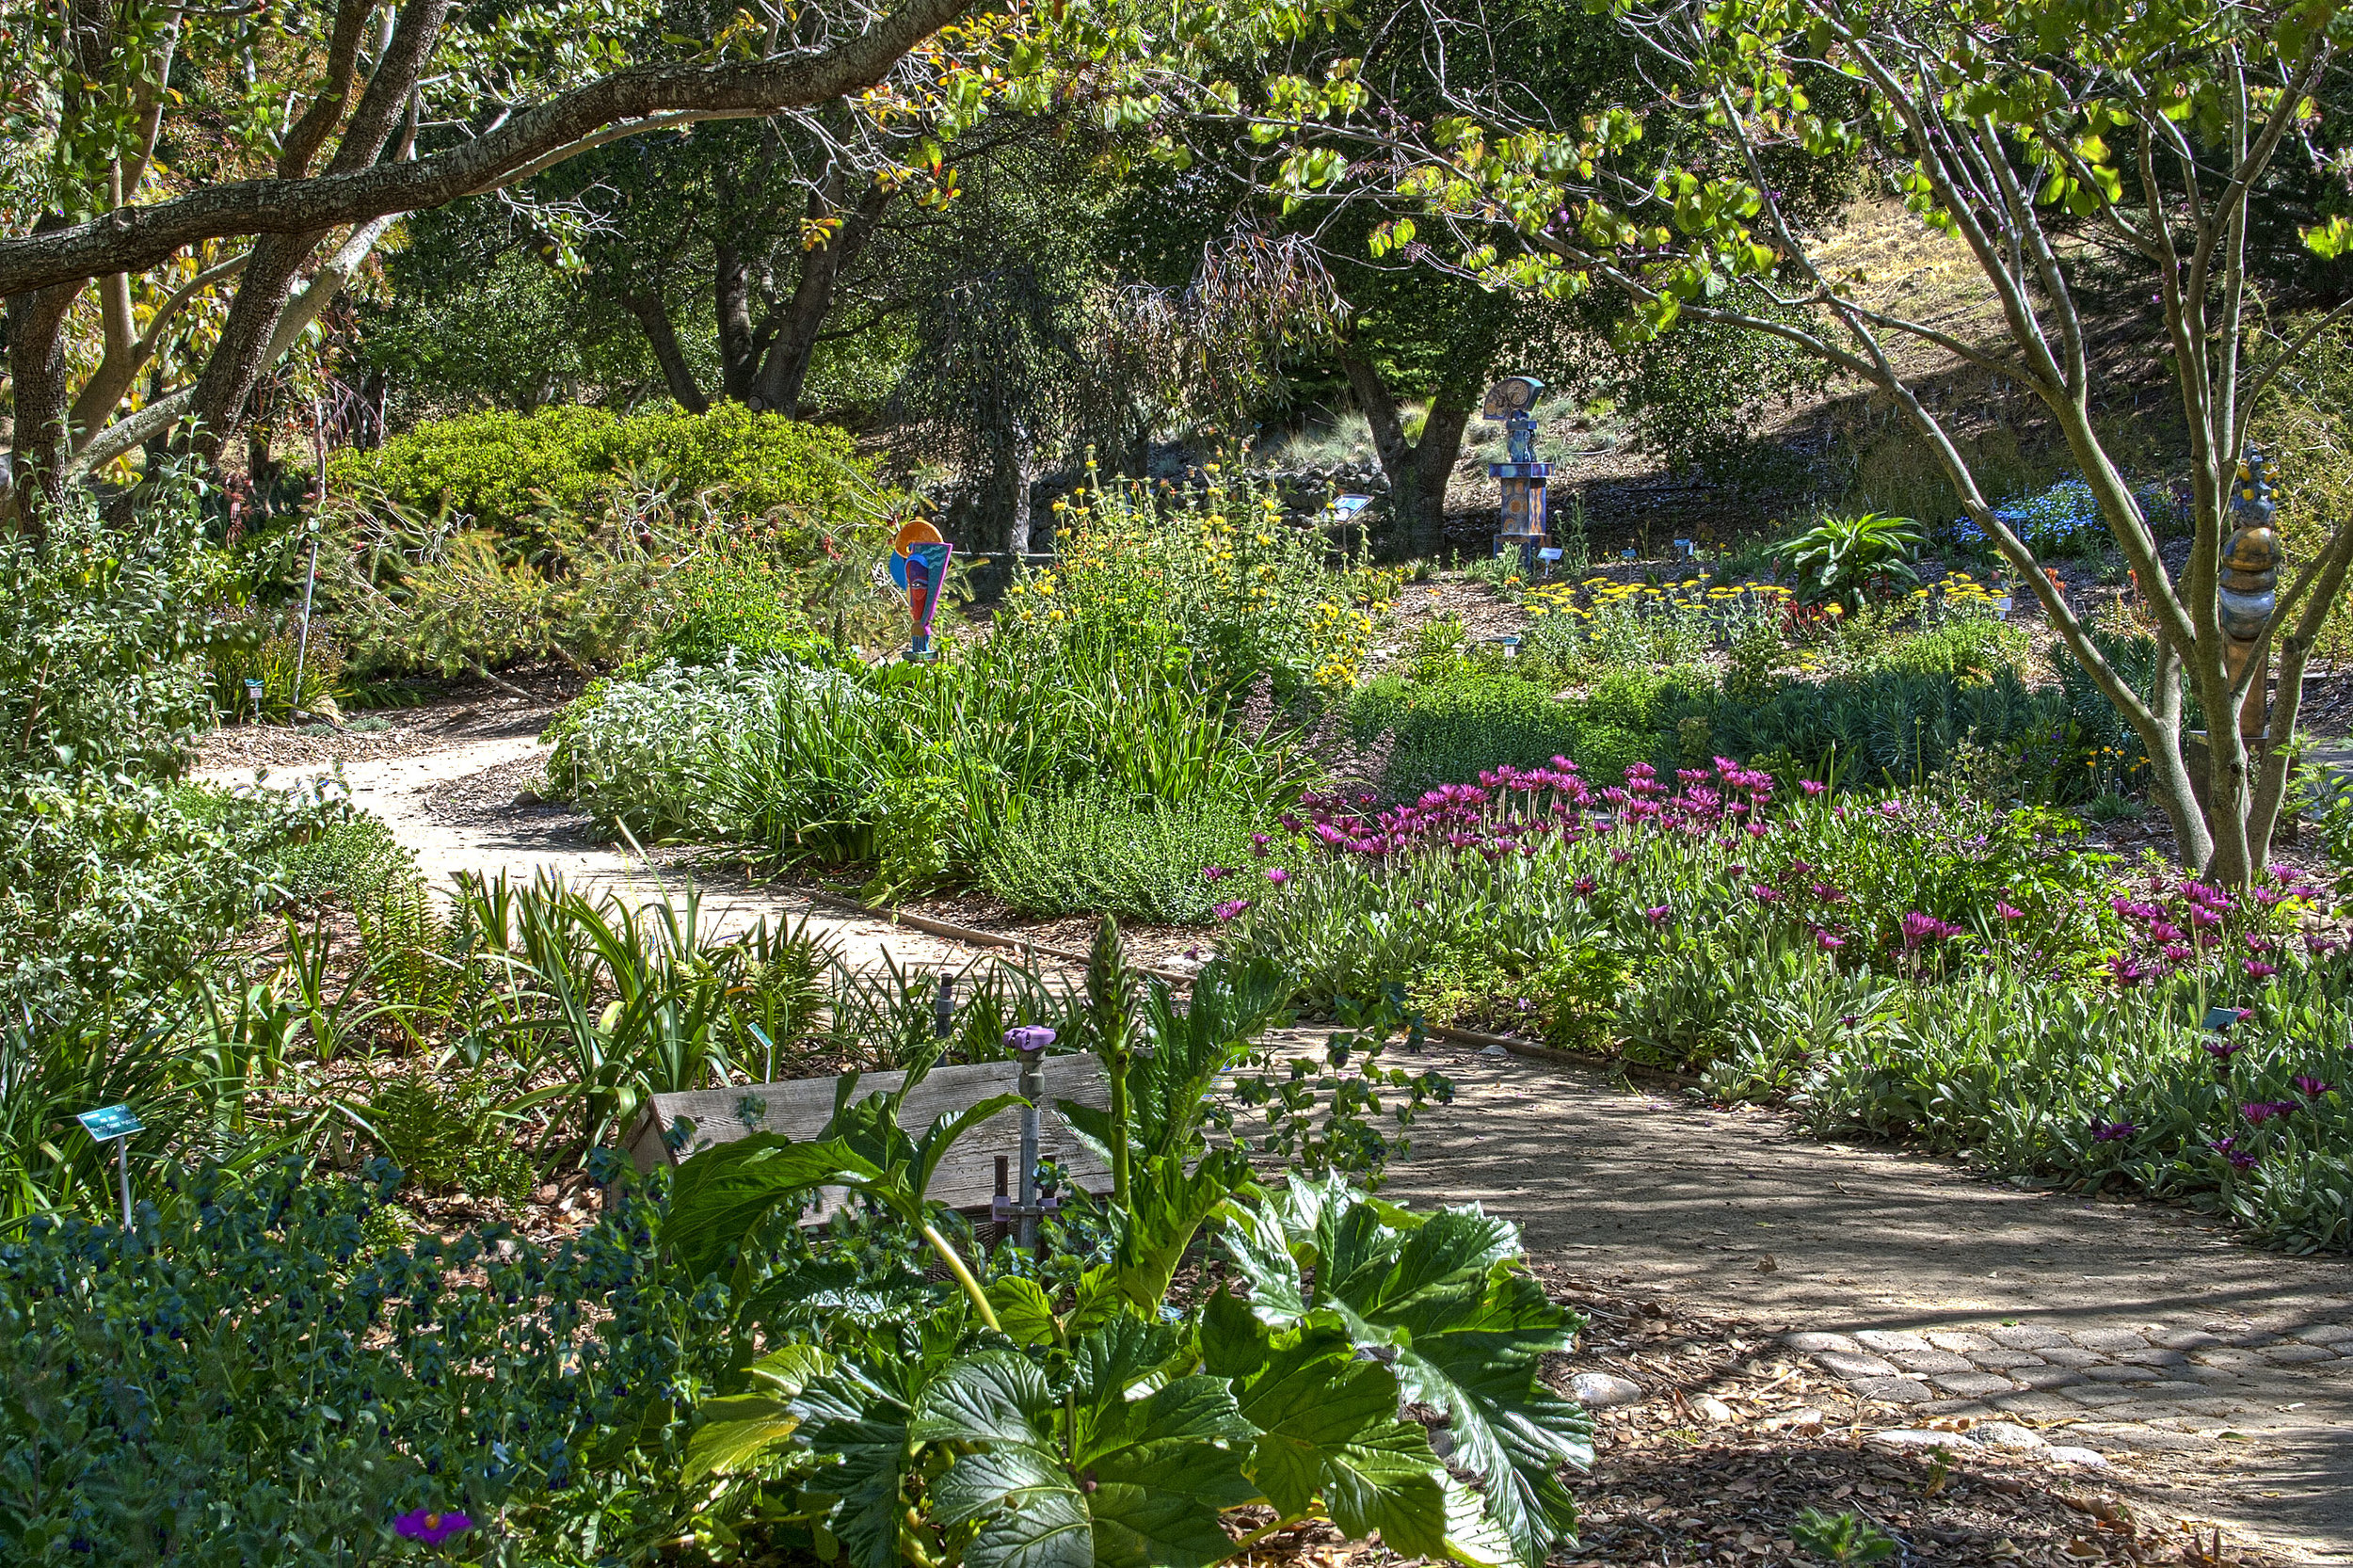 Display garden at San Luis Obispo Botanical Garden